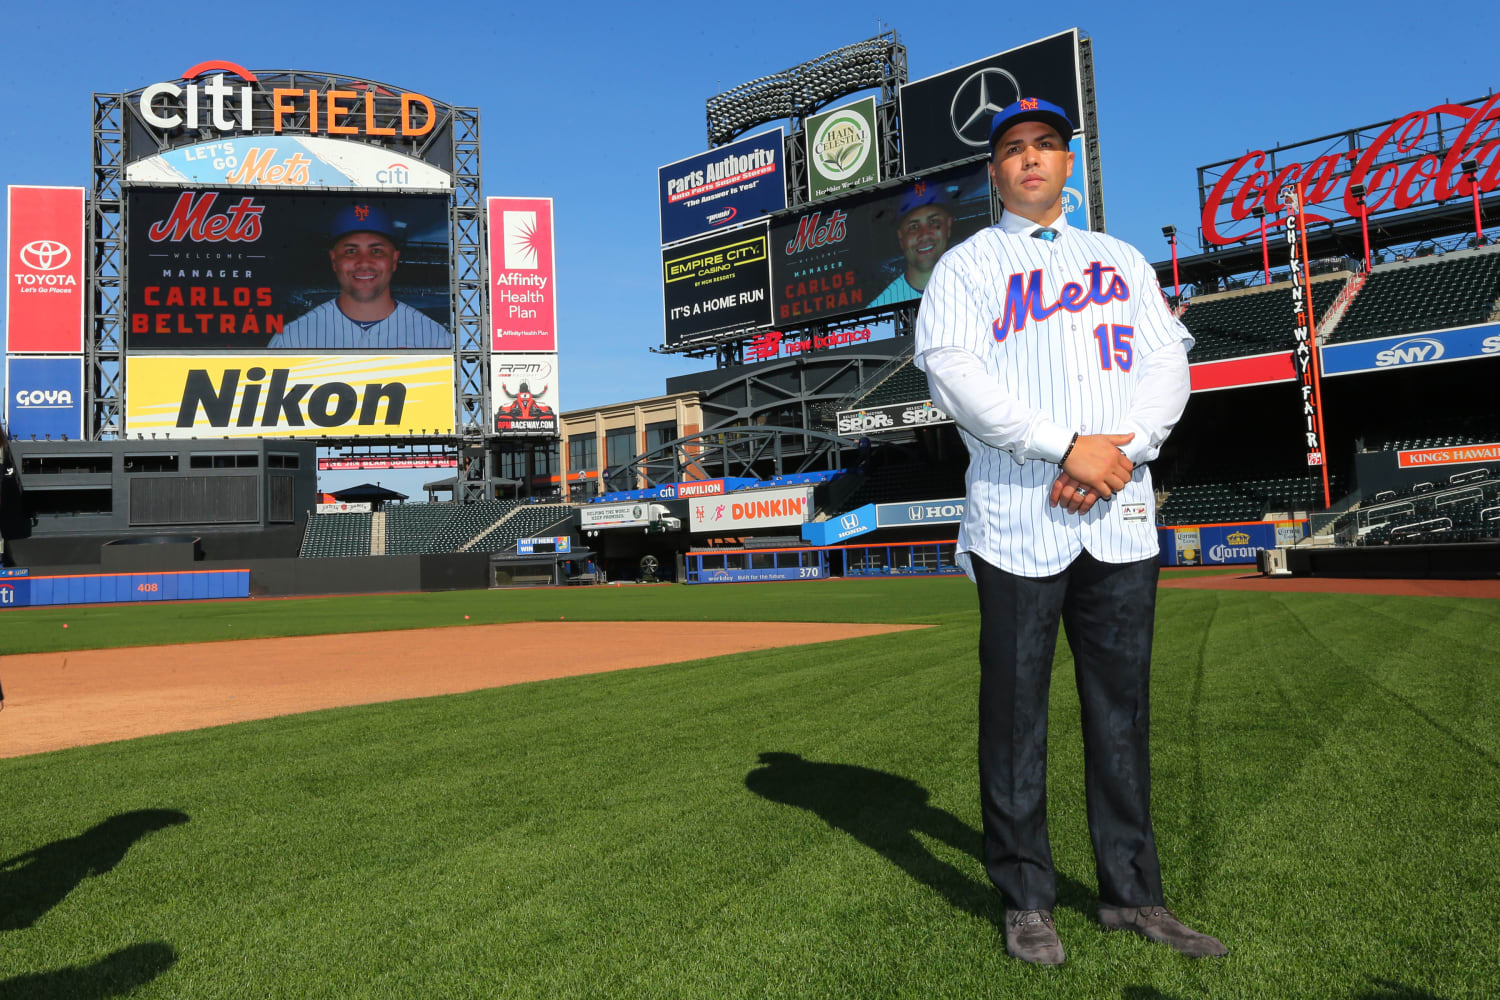 Ex-Mets manager Carlos Beltran didn't live up to hero Roberto